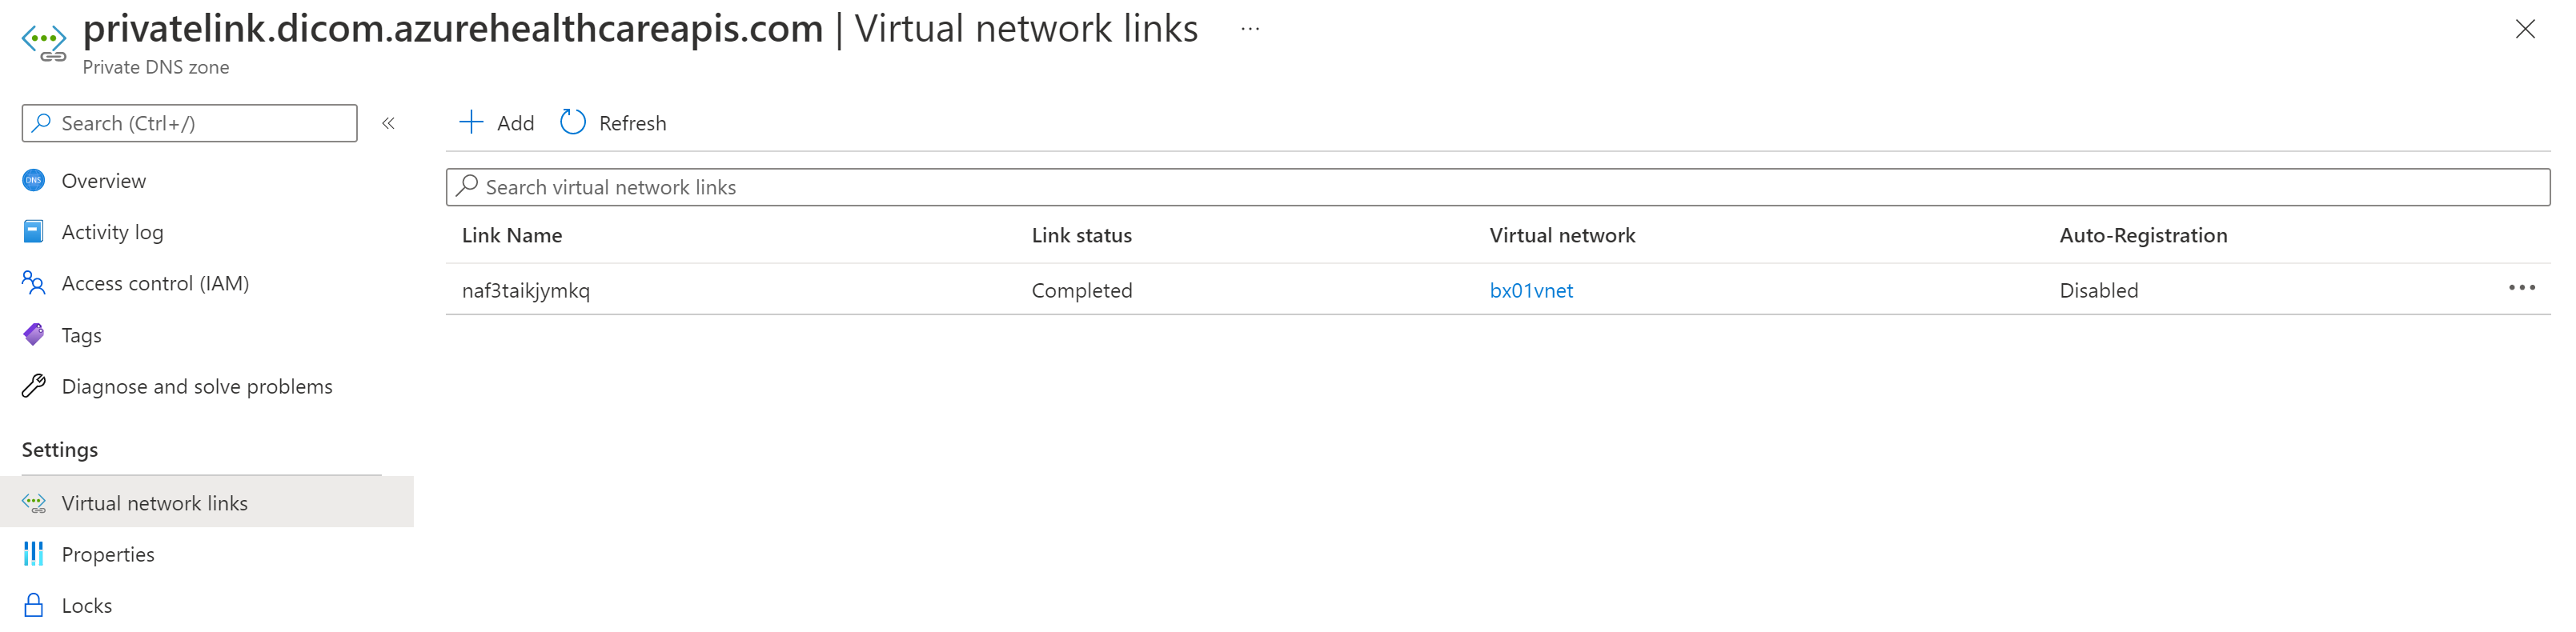 Private Link 仮想ネットワーク リンク DICOM の画像を示すスクリーンショット。